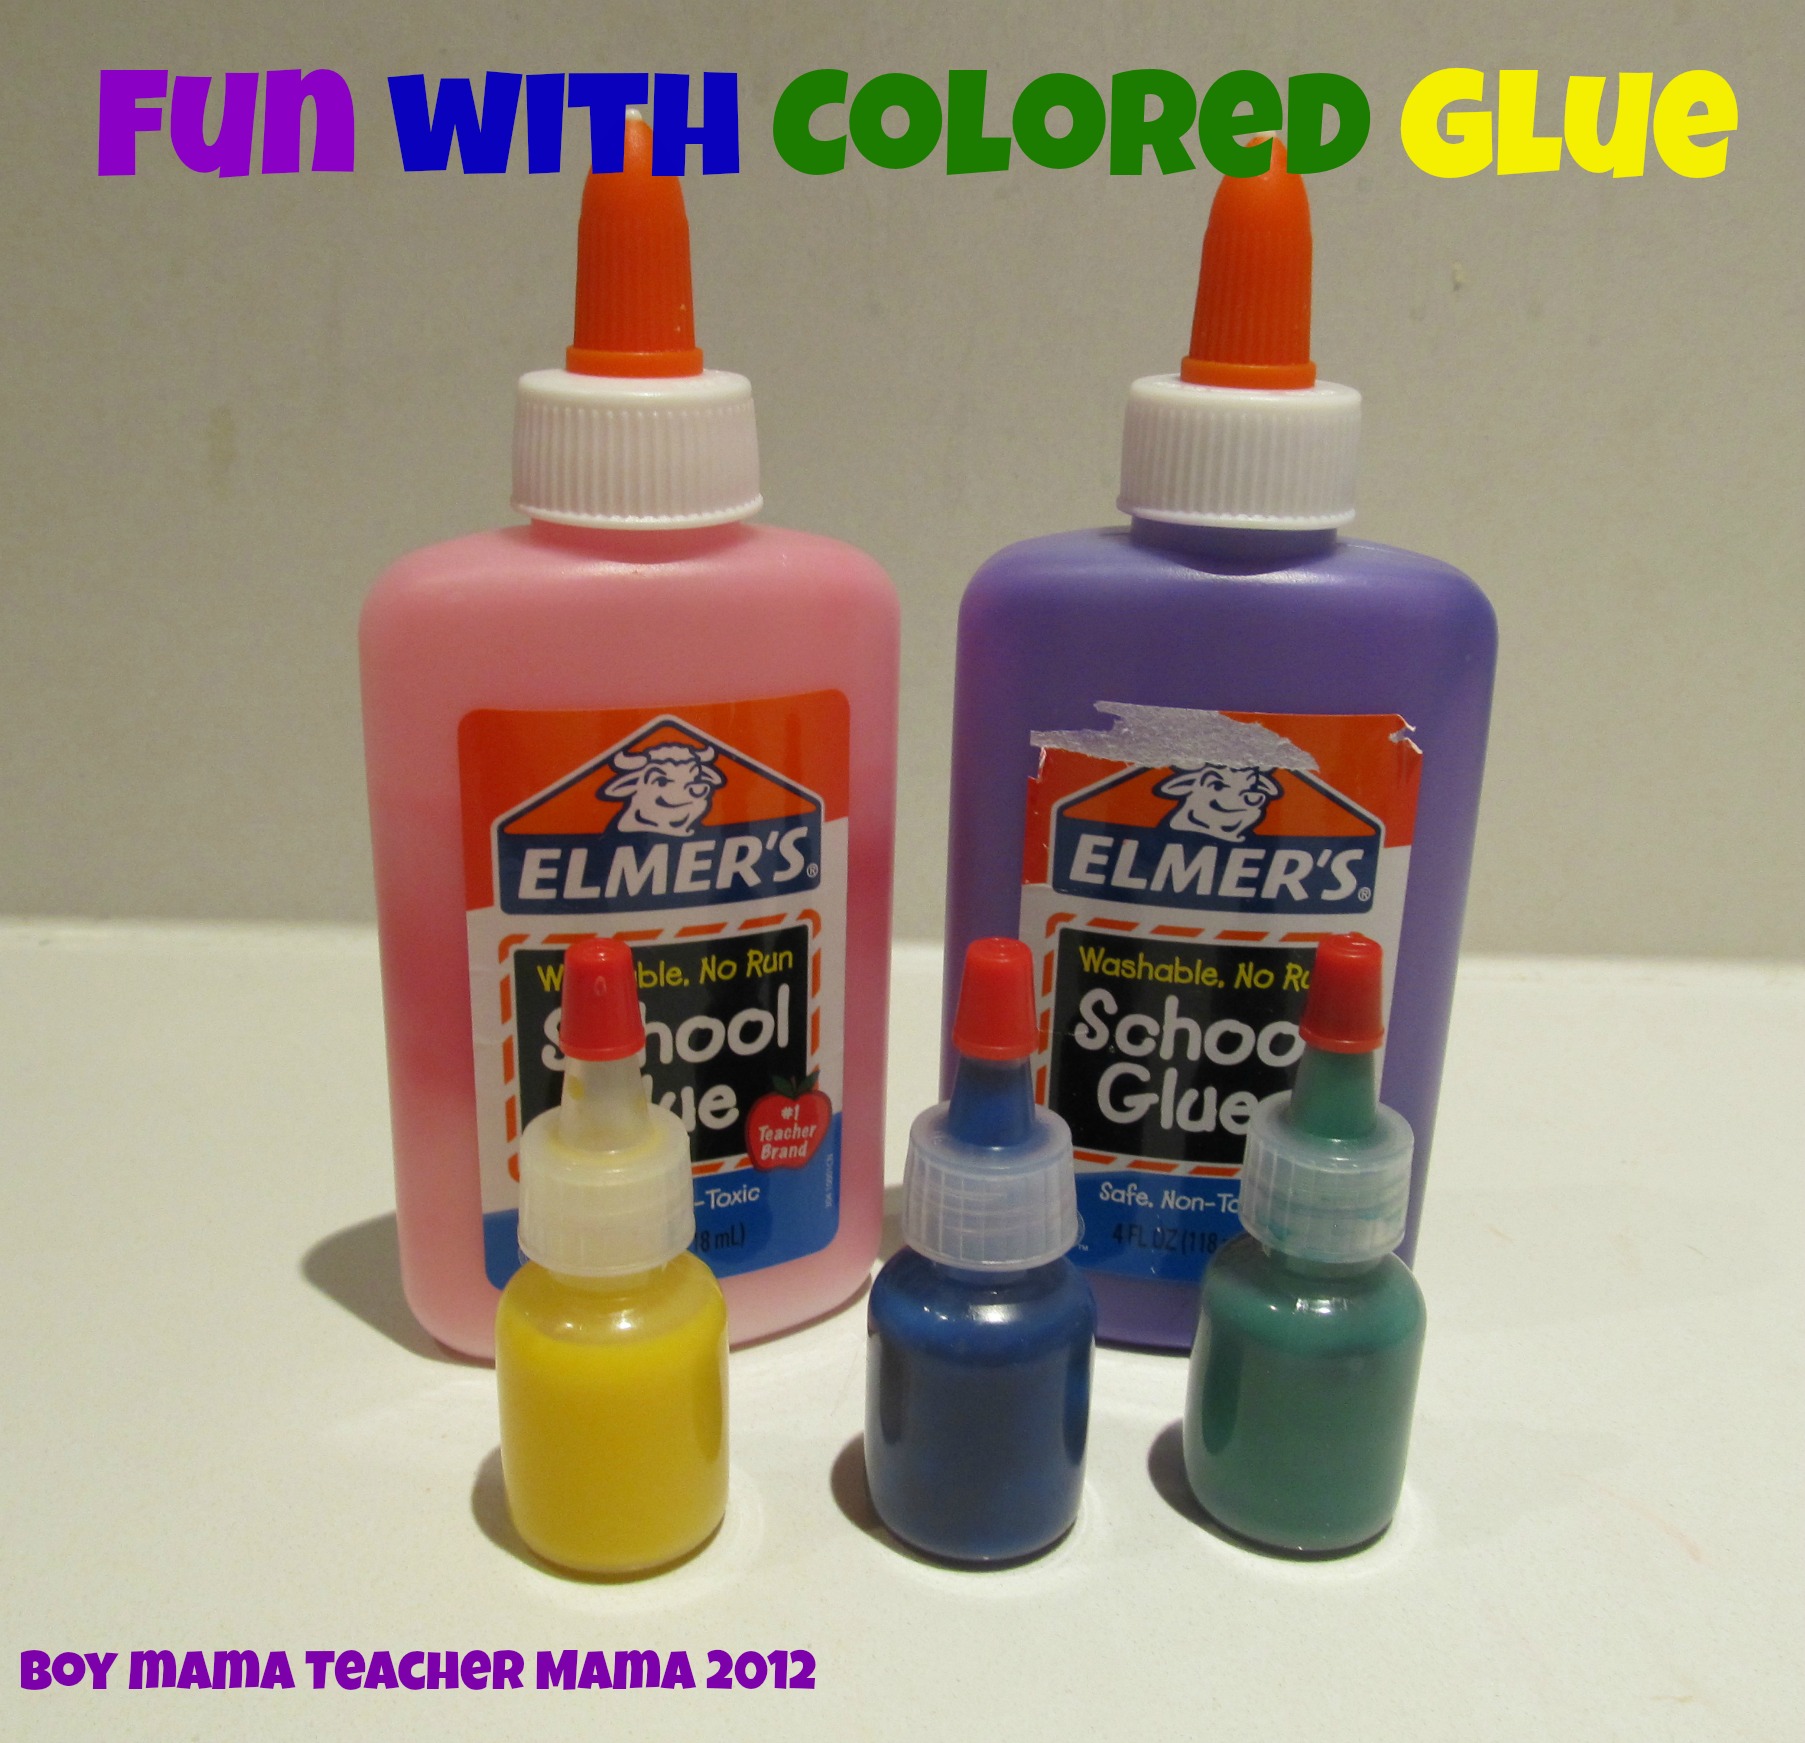 Peekaboo glue? This fun tip reminds students to twist their glue